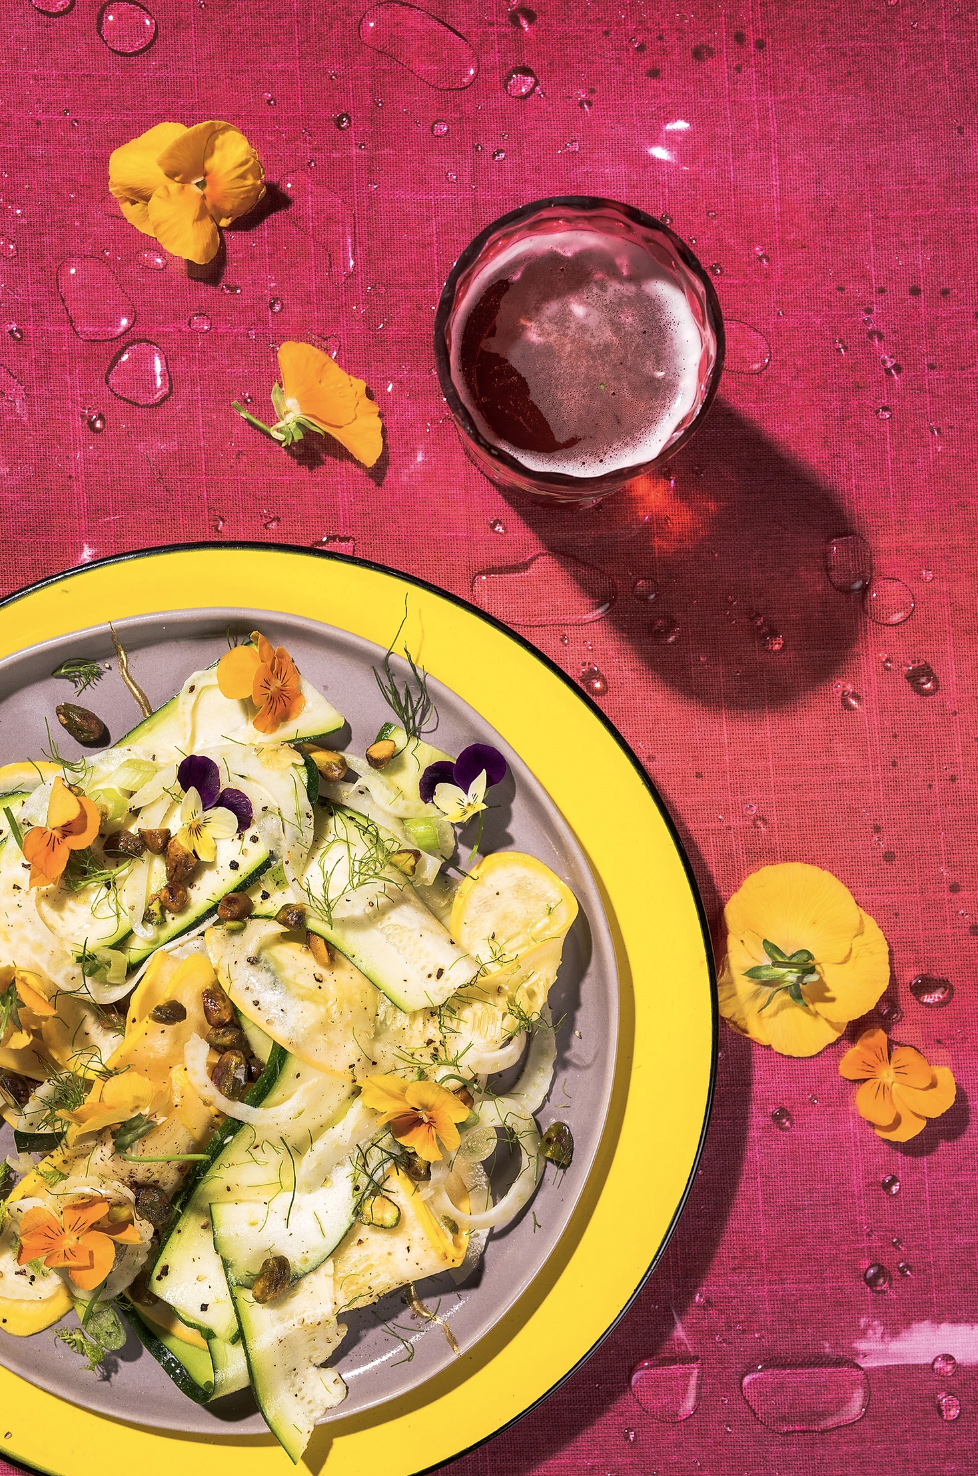 zucchini salad Johanna Brannan Lowe Food and Prop Stylist | recipe developer Chicago